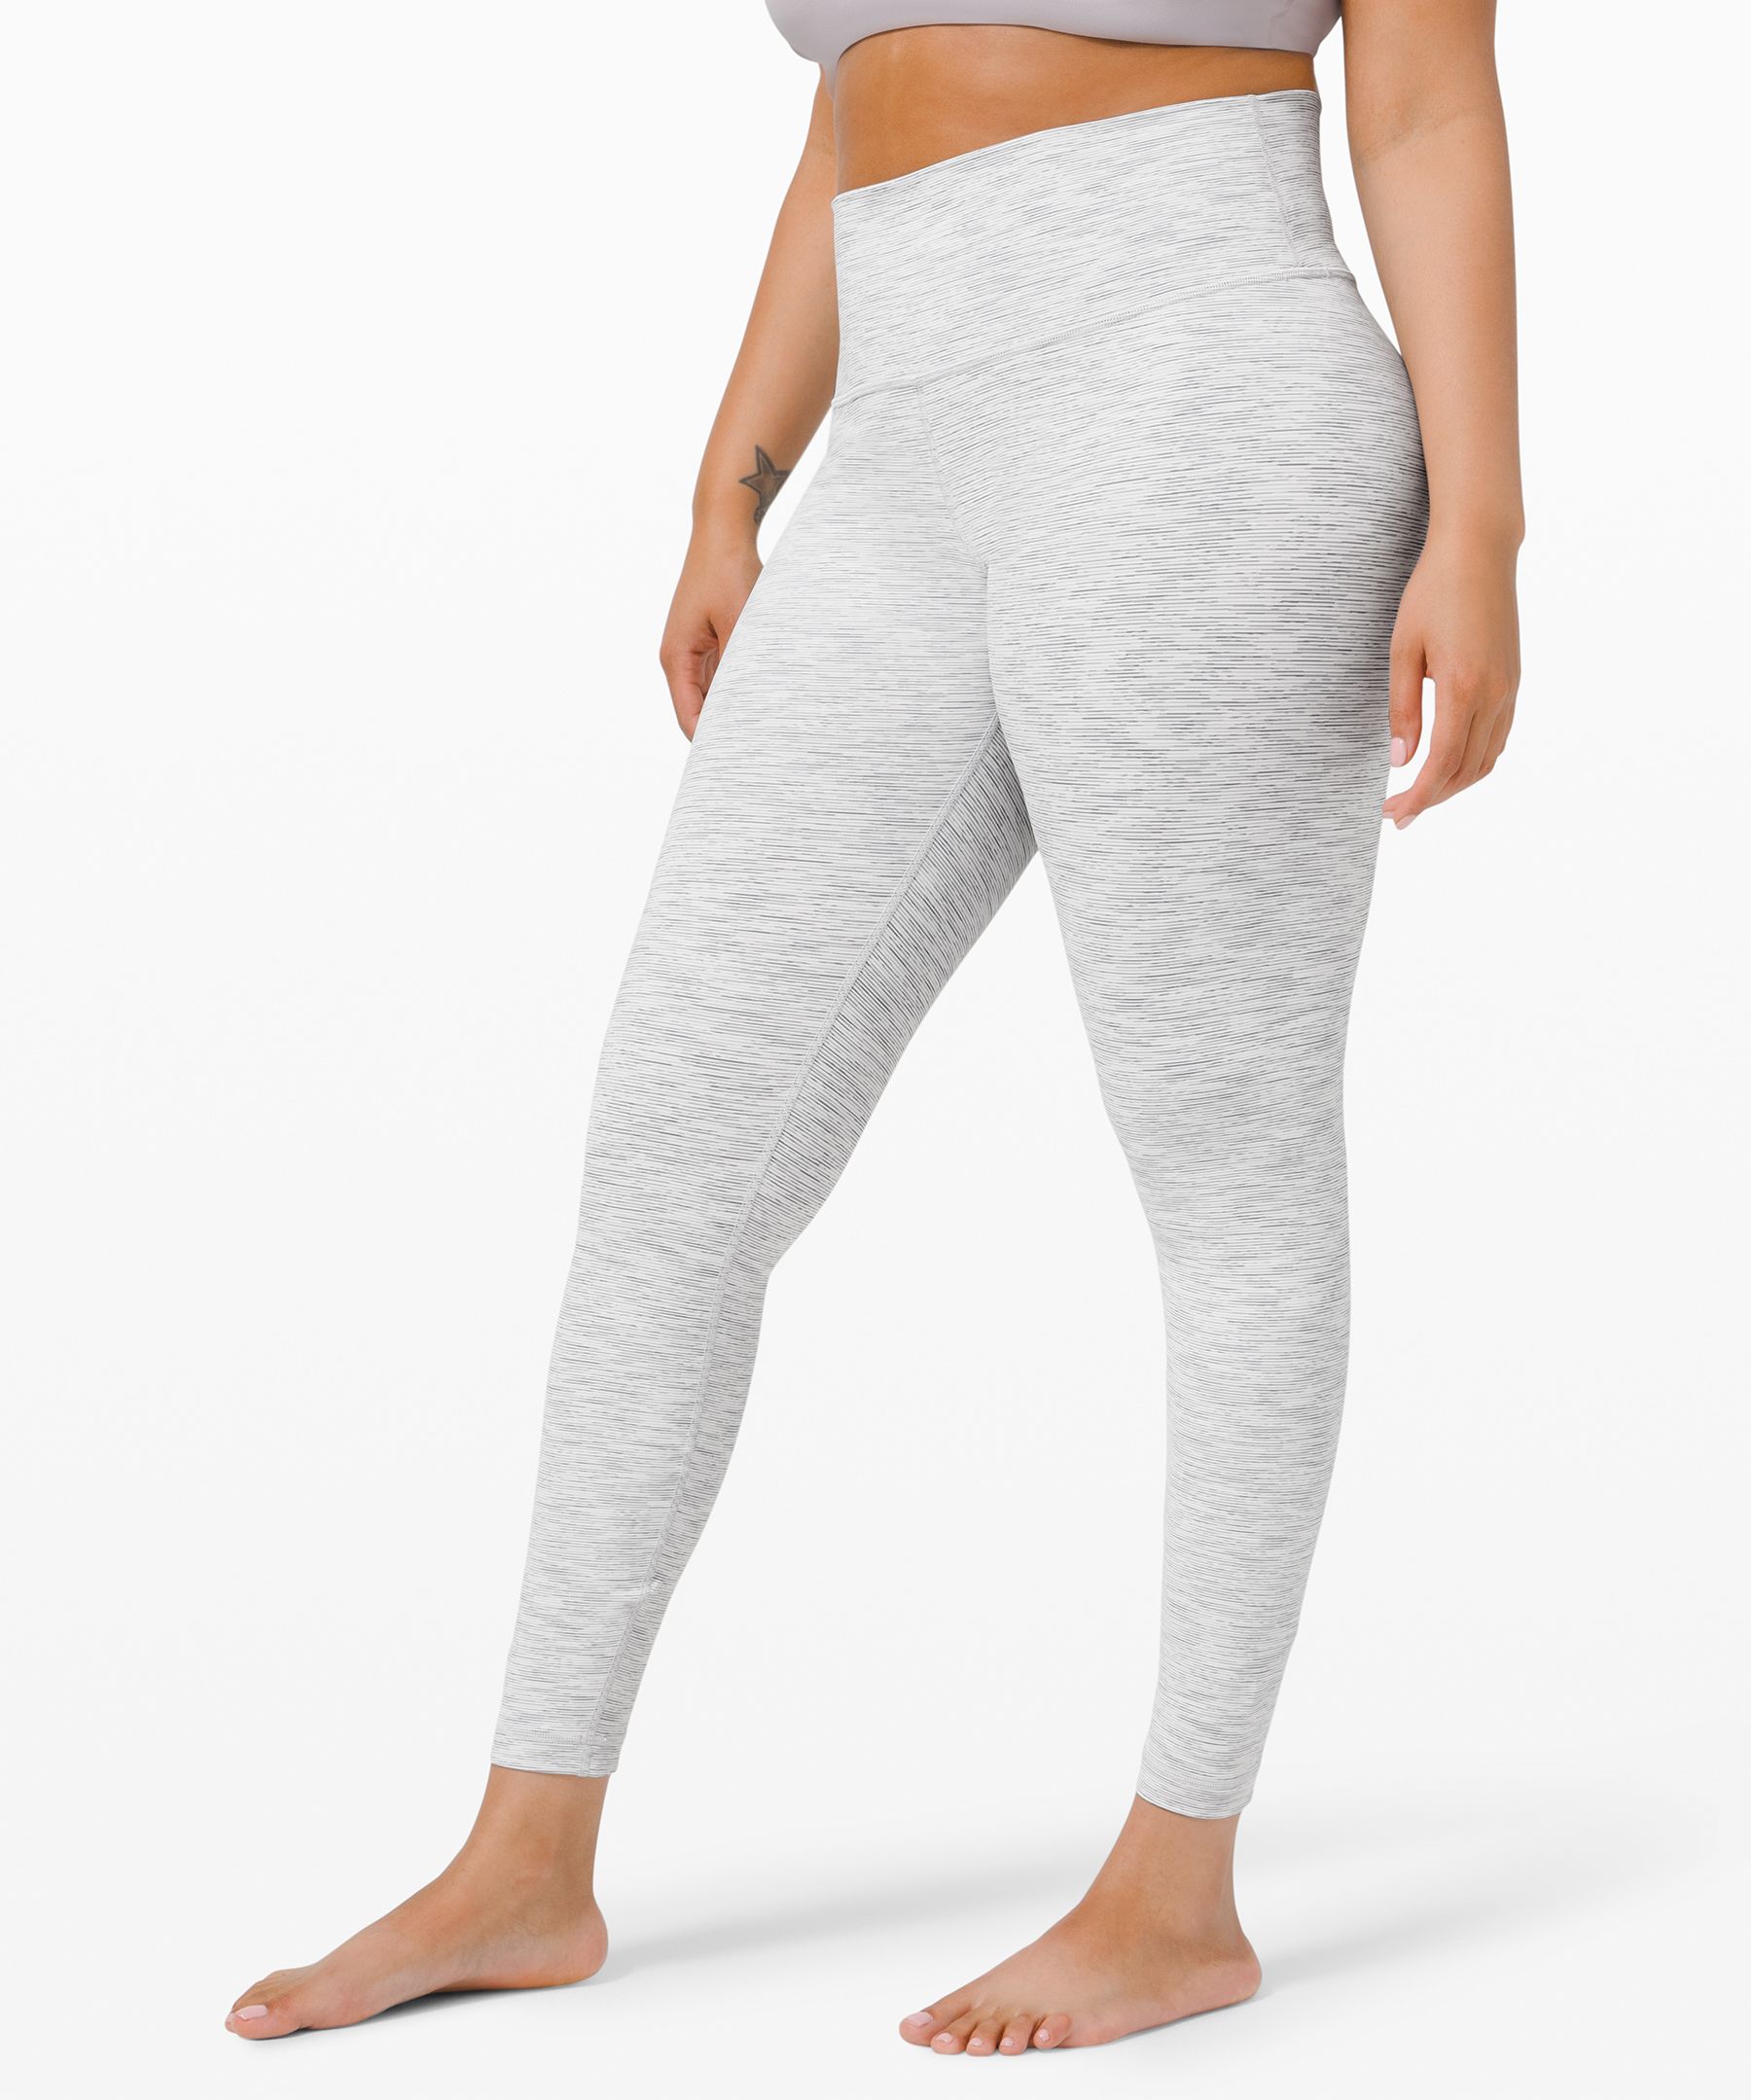 grey and white lululemon leggings